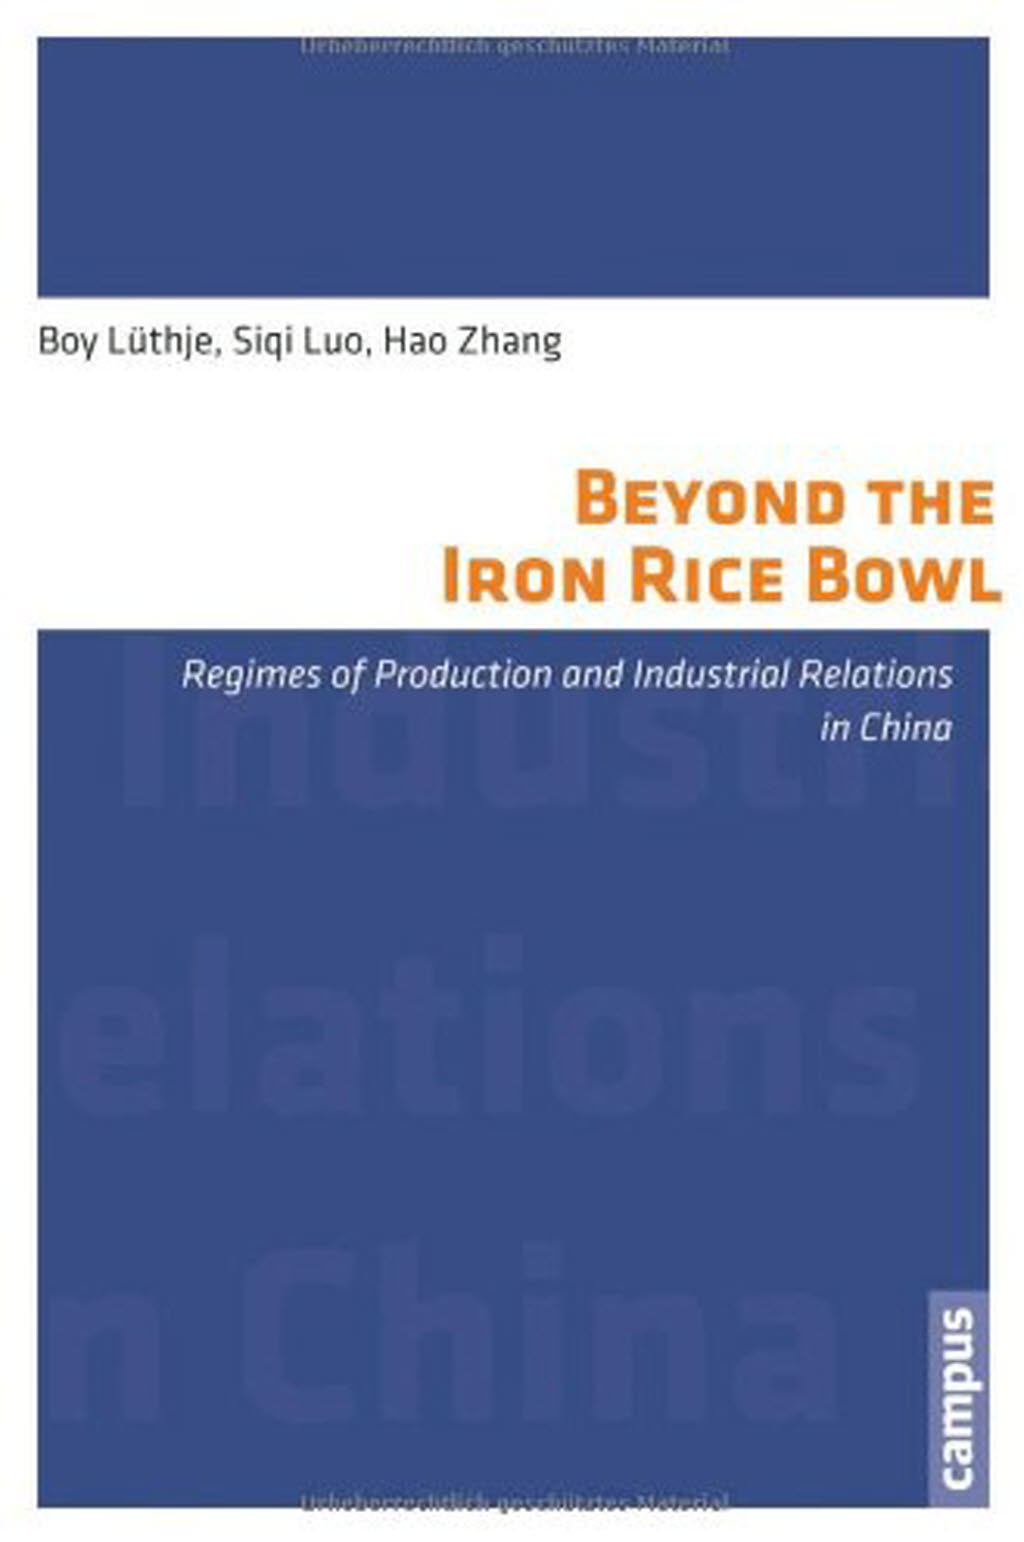 Beyond the Iron Rice Bowl